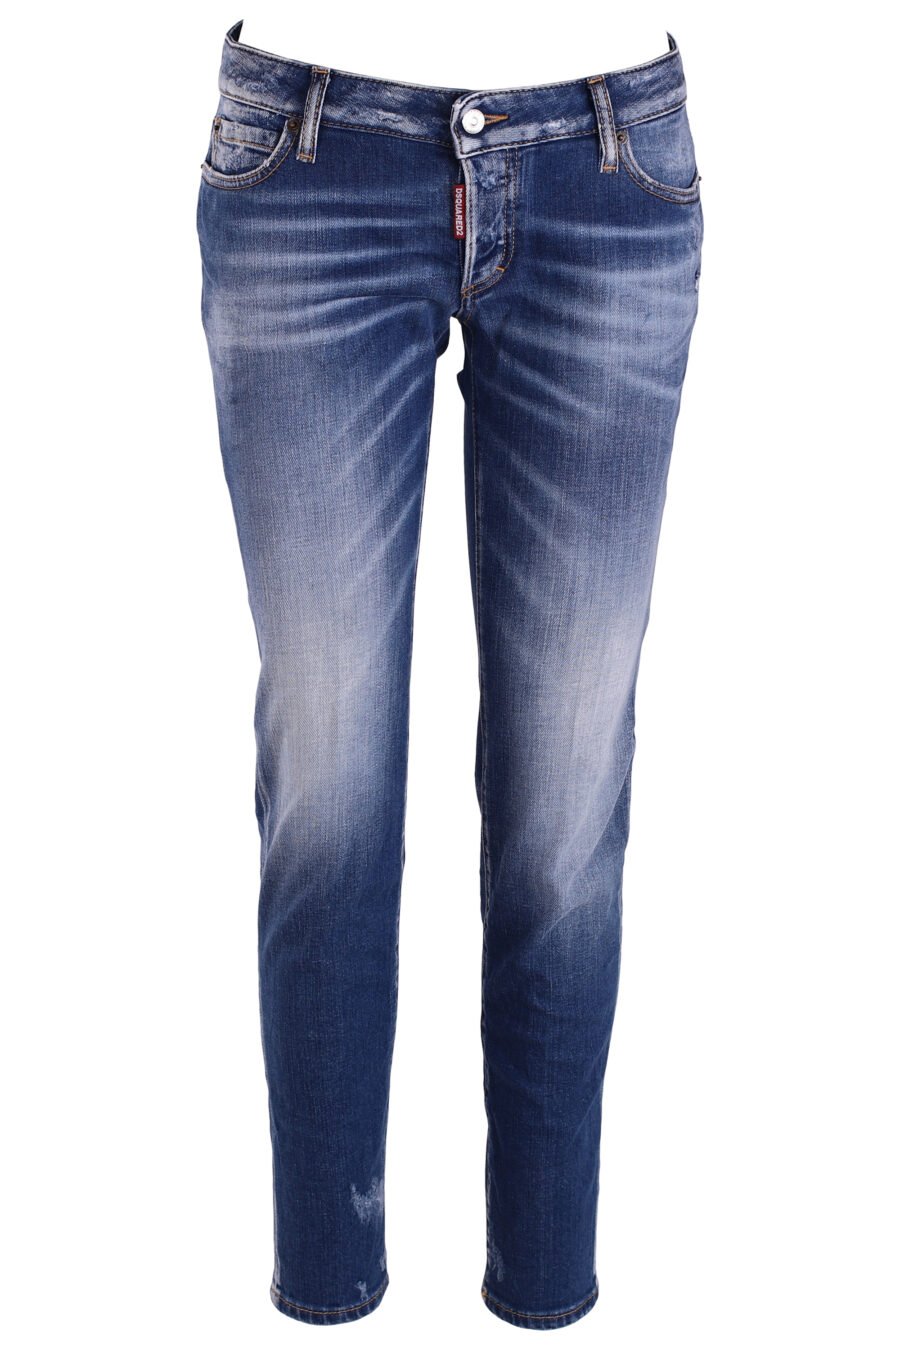 Jeans "jennifer jean" blue worn - IMG 3764